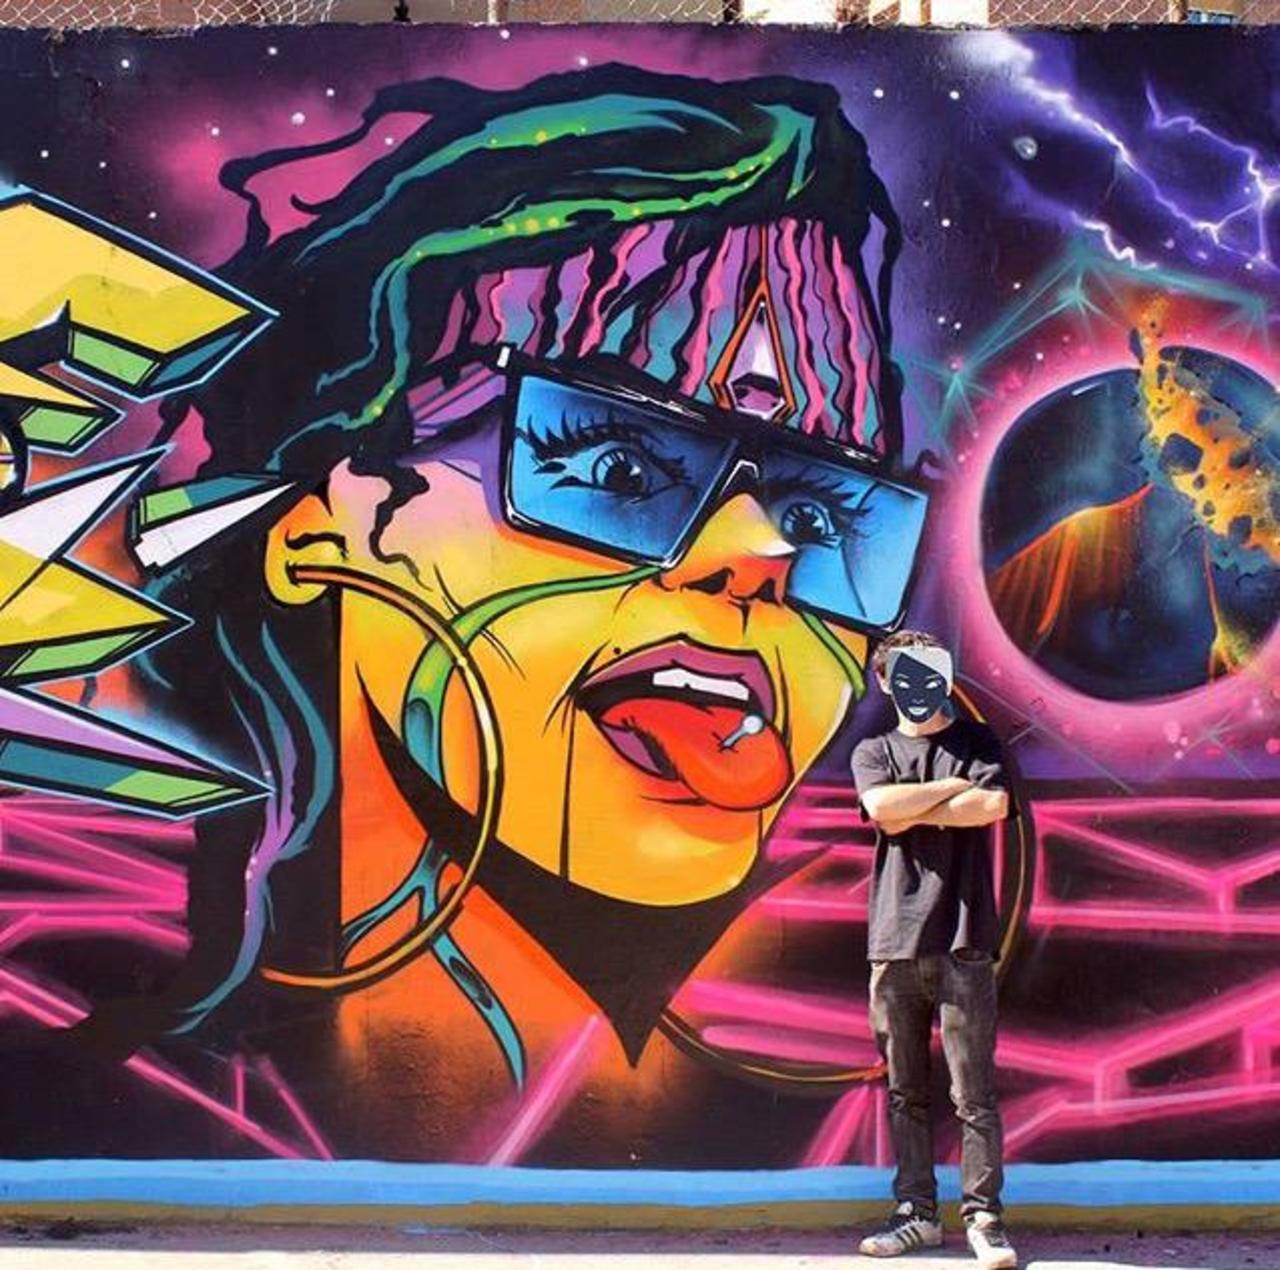 Brilliant new Street Art by the artist Jaycaes

#art #graffiti #mural #streetart http://t.co/FT2D5Haxcy